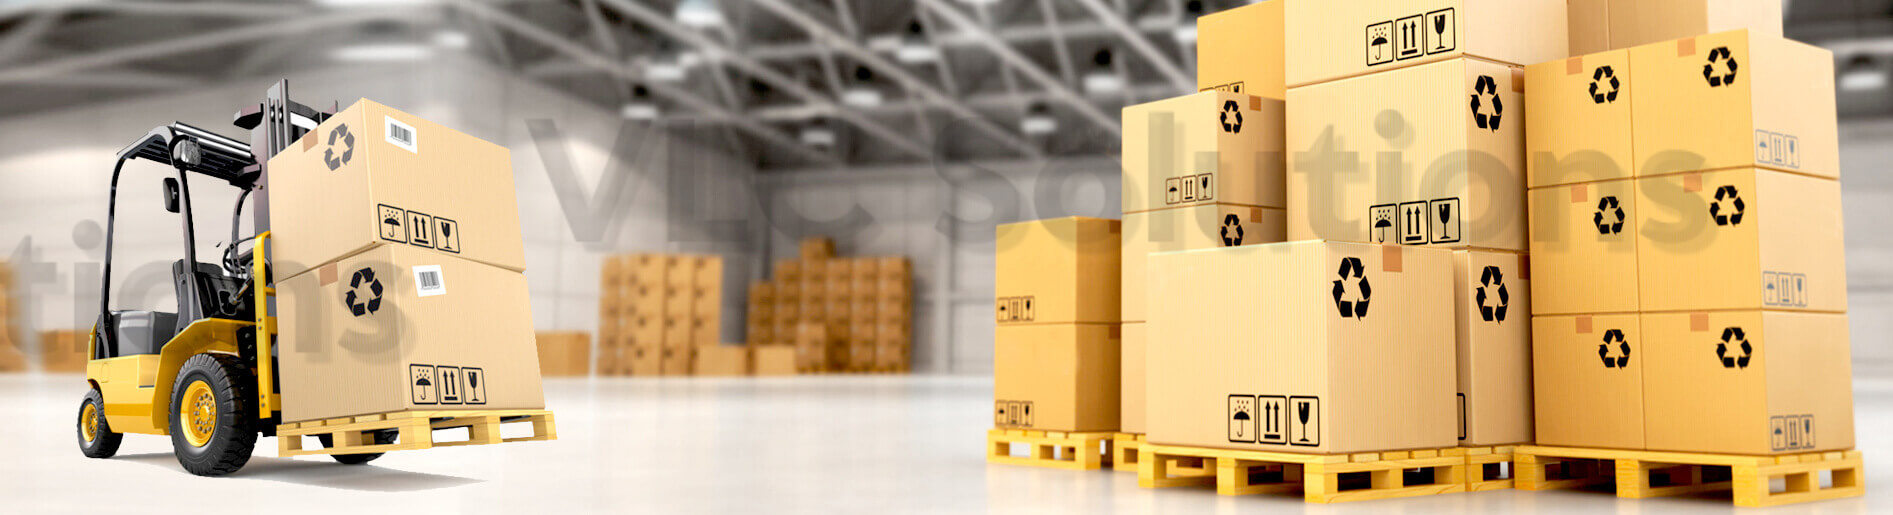 Warehouse Management & Distribution Services